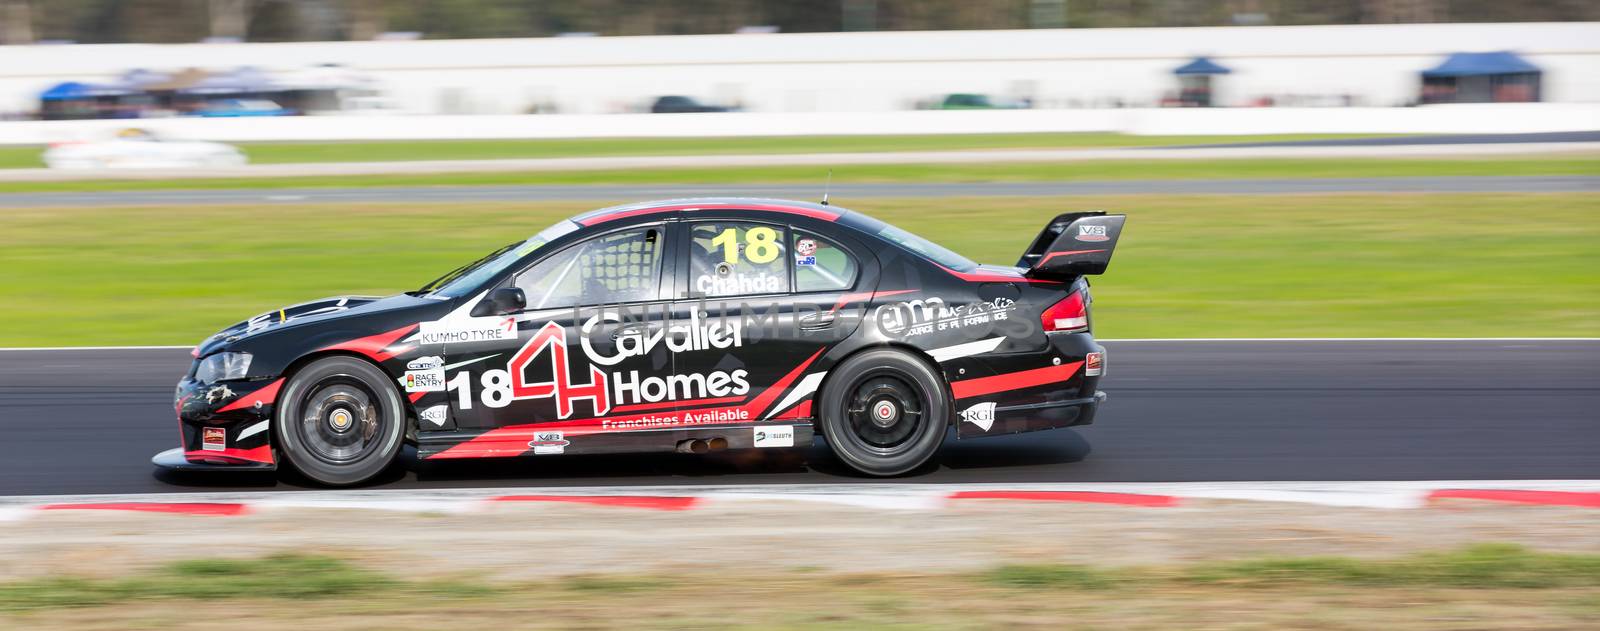 MELBOURNE, WINTON/AUSTRALIA, 22 MAY , 2016: Kumho Tyre Australian V8 Touring Car Series - Matt Chahda (Cavalier Homes) during Race 3 at Winton Raceway.